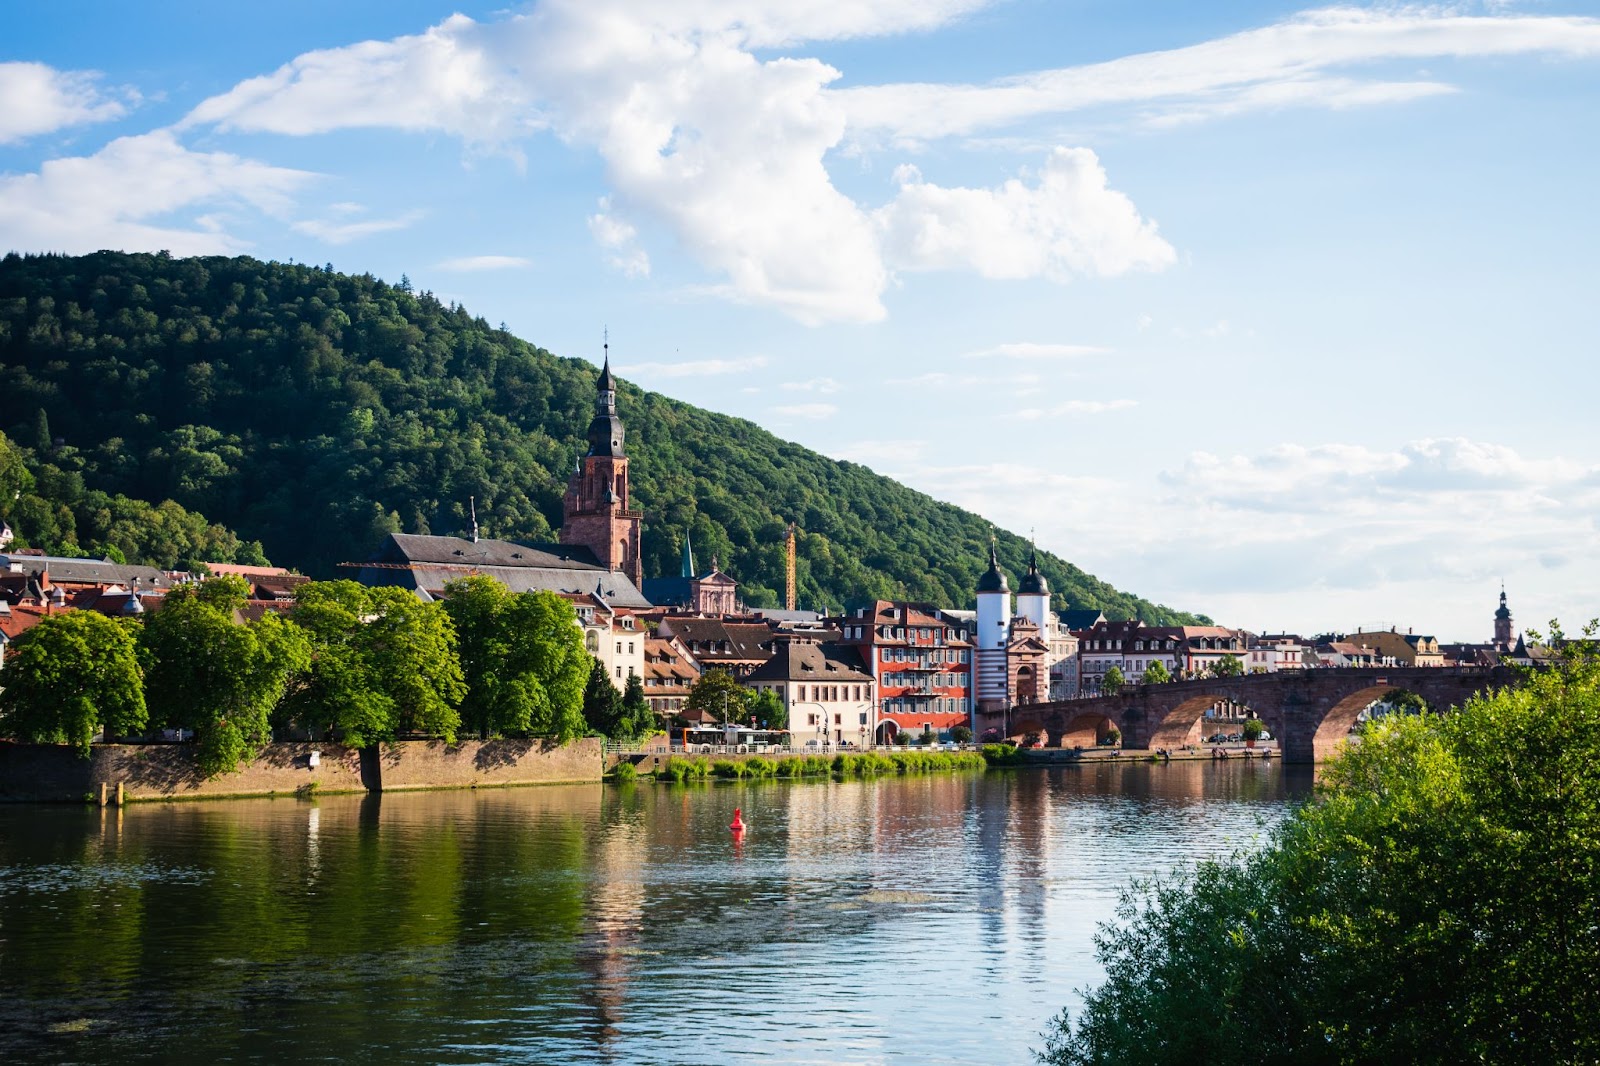 Scenic view of Heidelberg in Germany